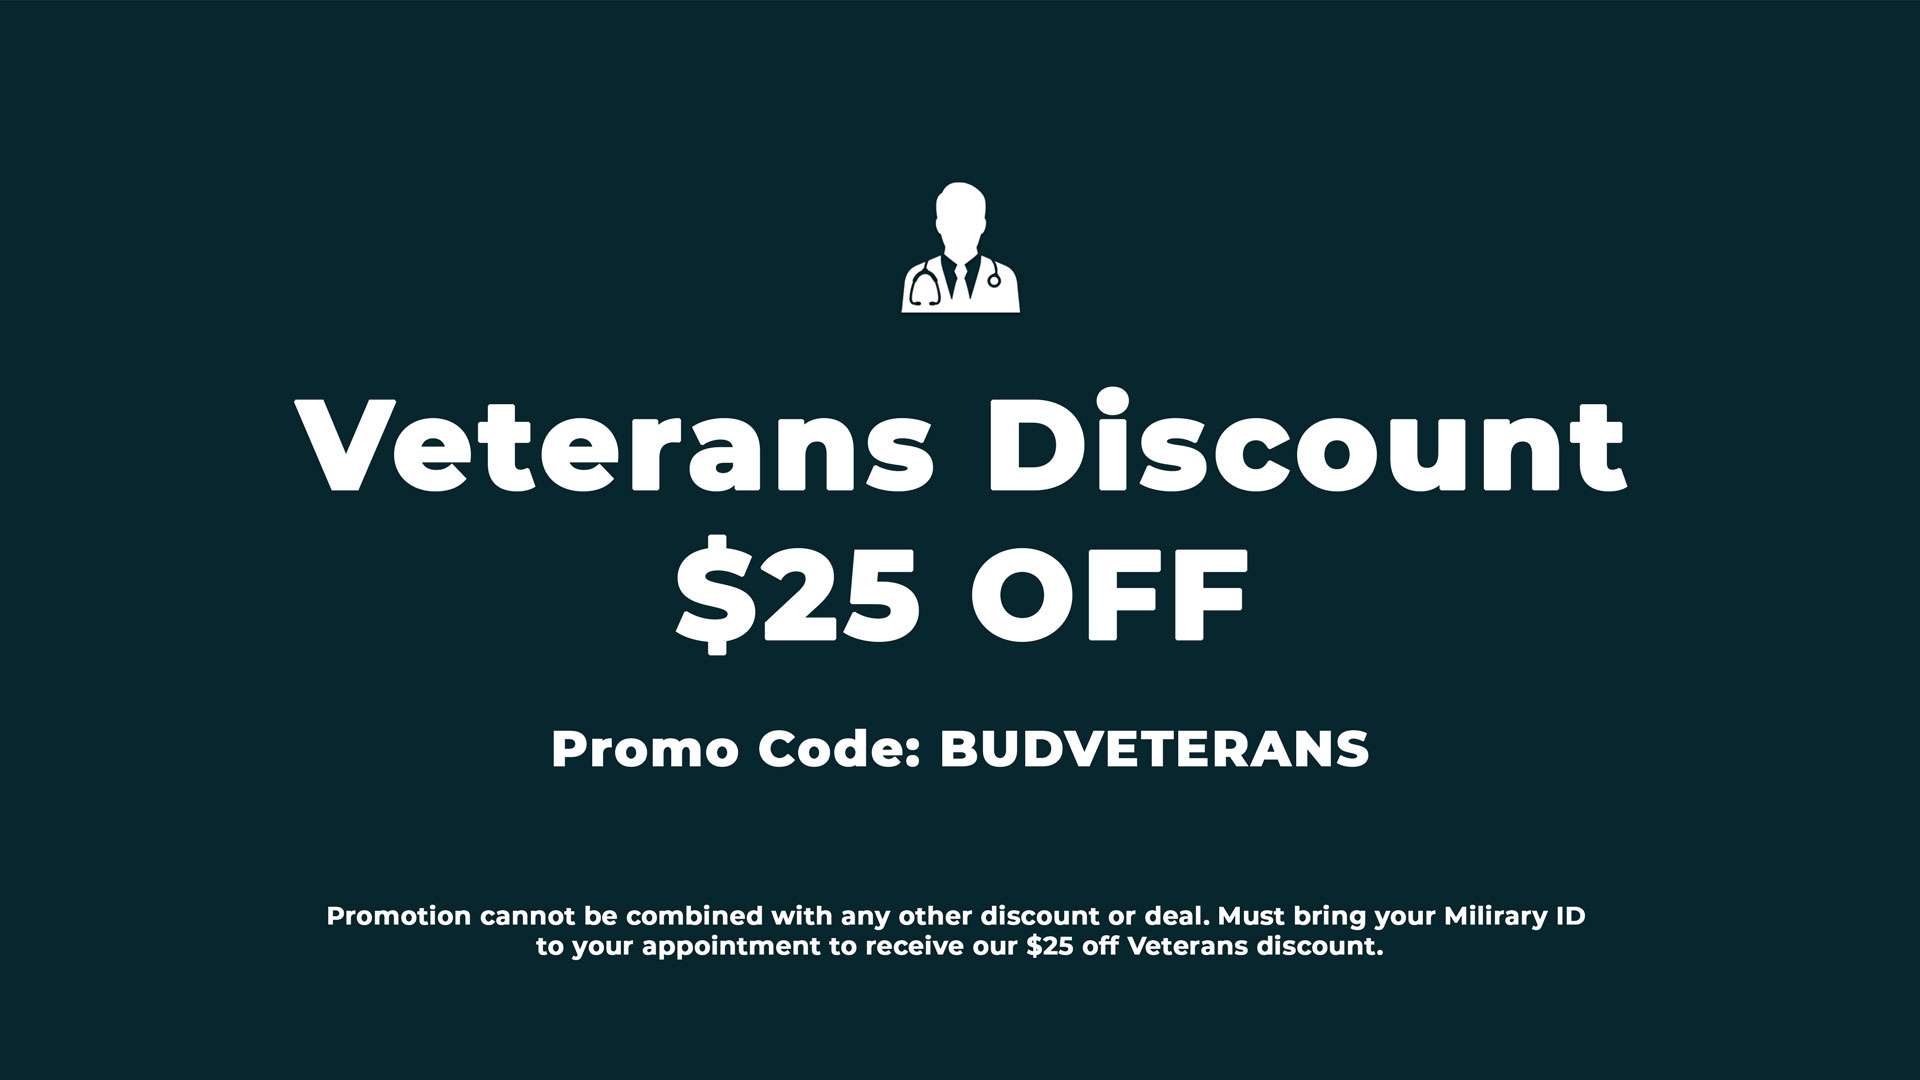 BudVeterans Veterans discount $25 off